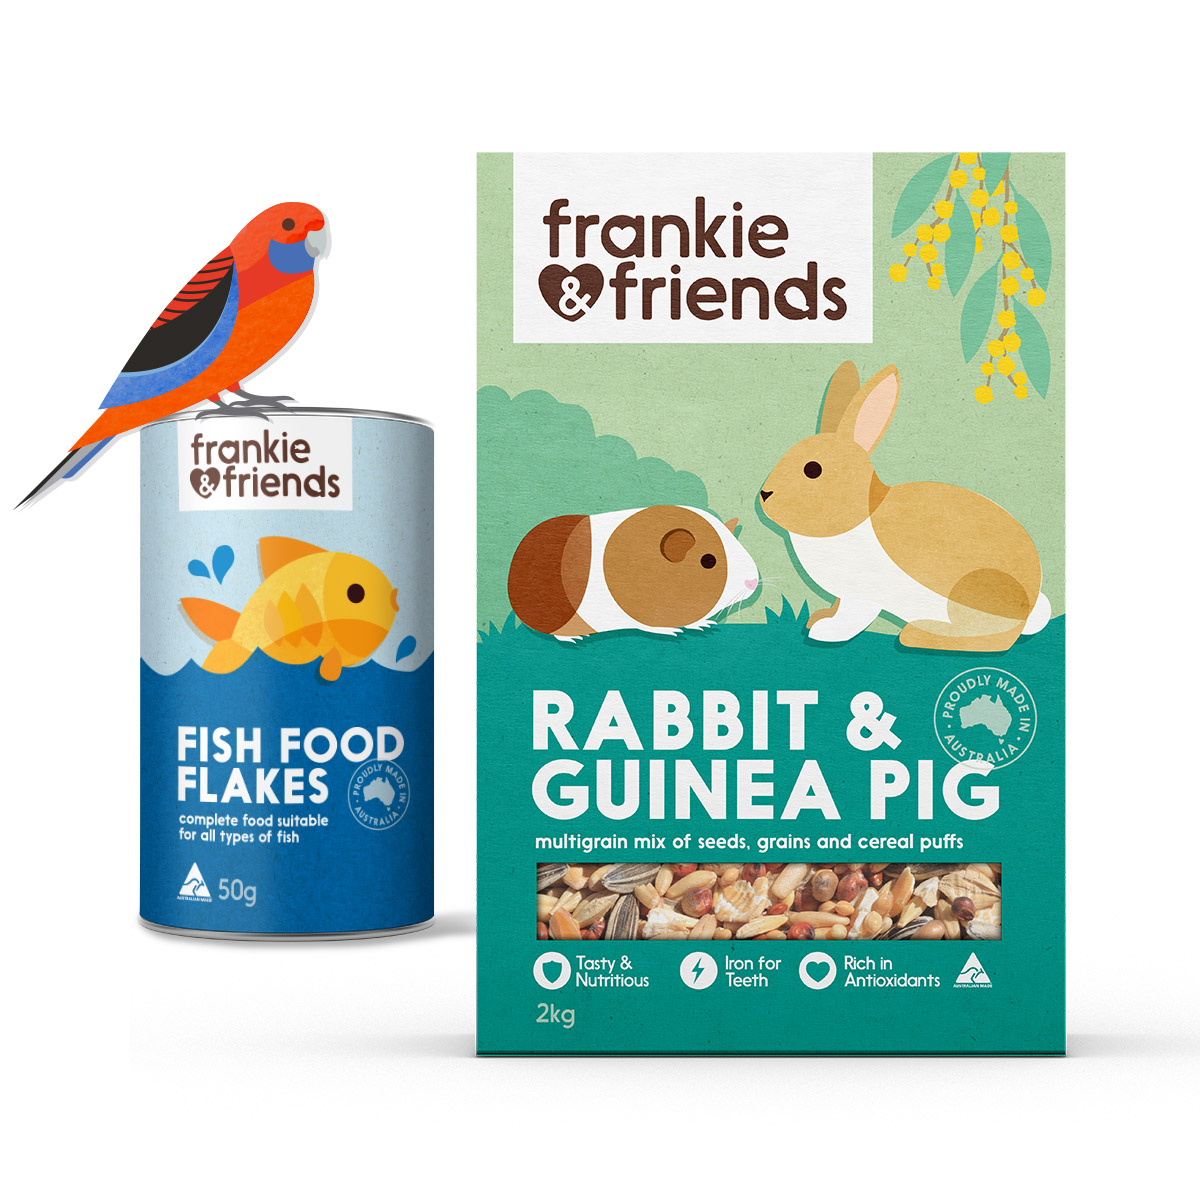 Frankie & Friends - Branding & Packaging - Boxer & Co.